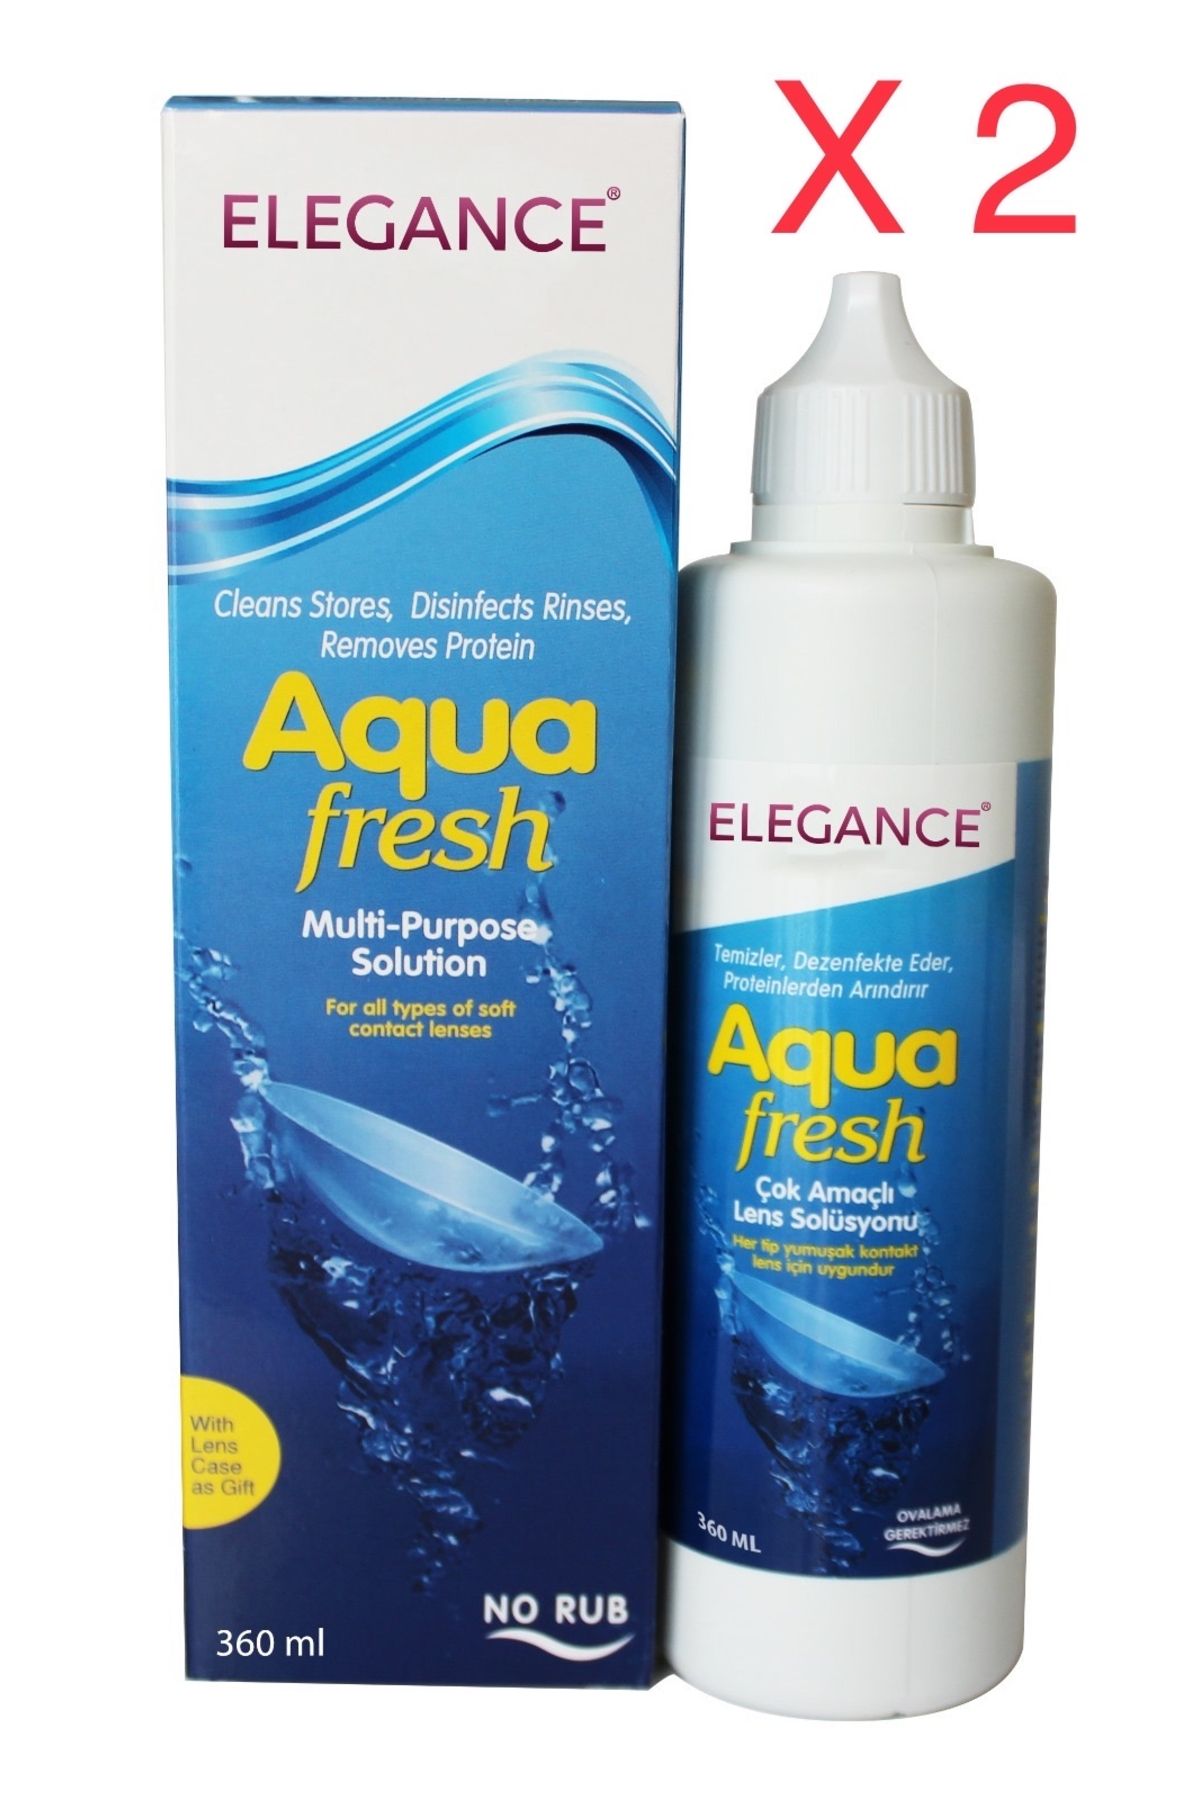 Aquafresh Elegance Aqua Fresh 360 ml + 2 ADET Lens Solusyonu